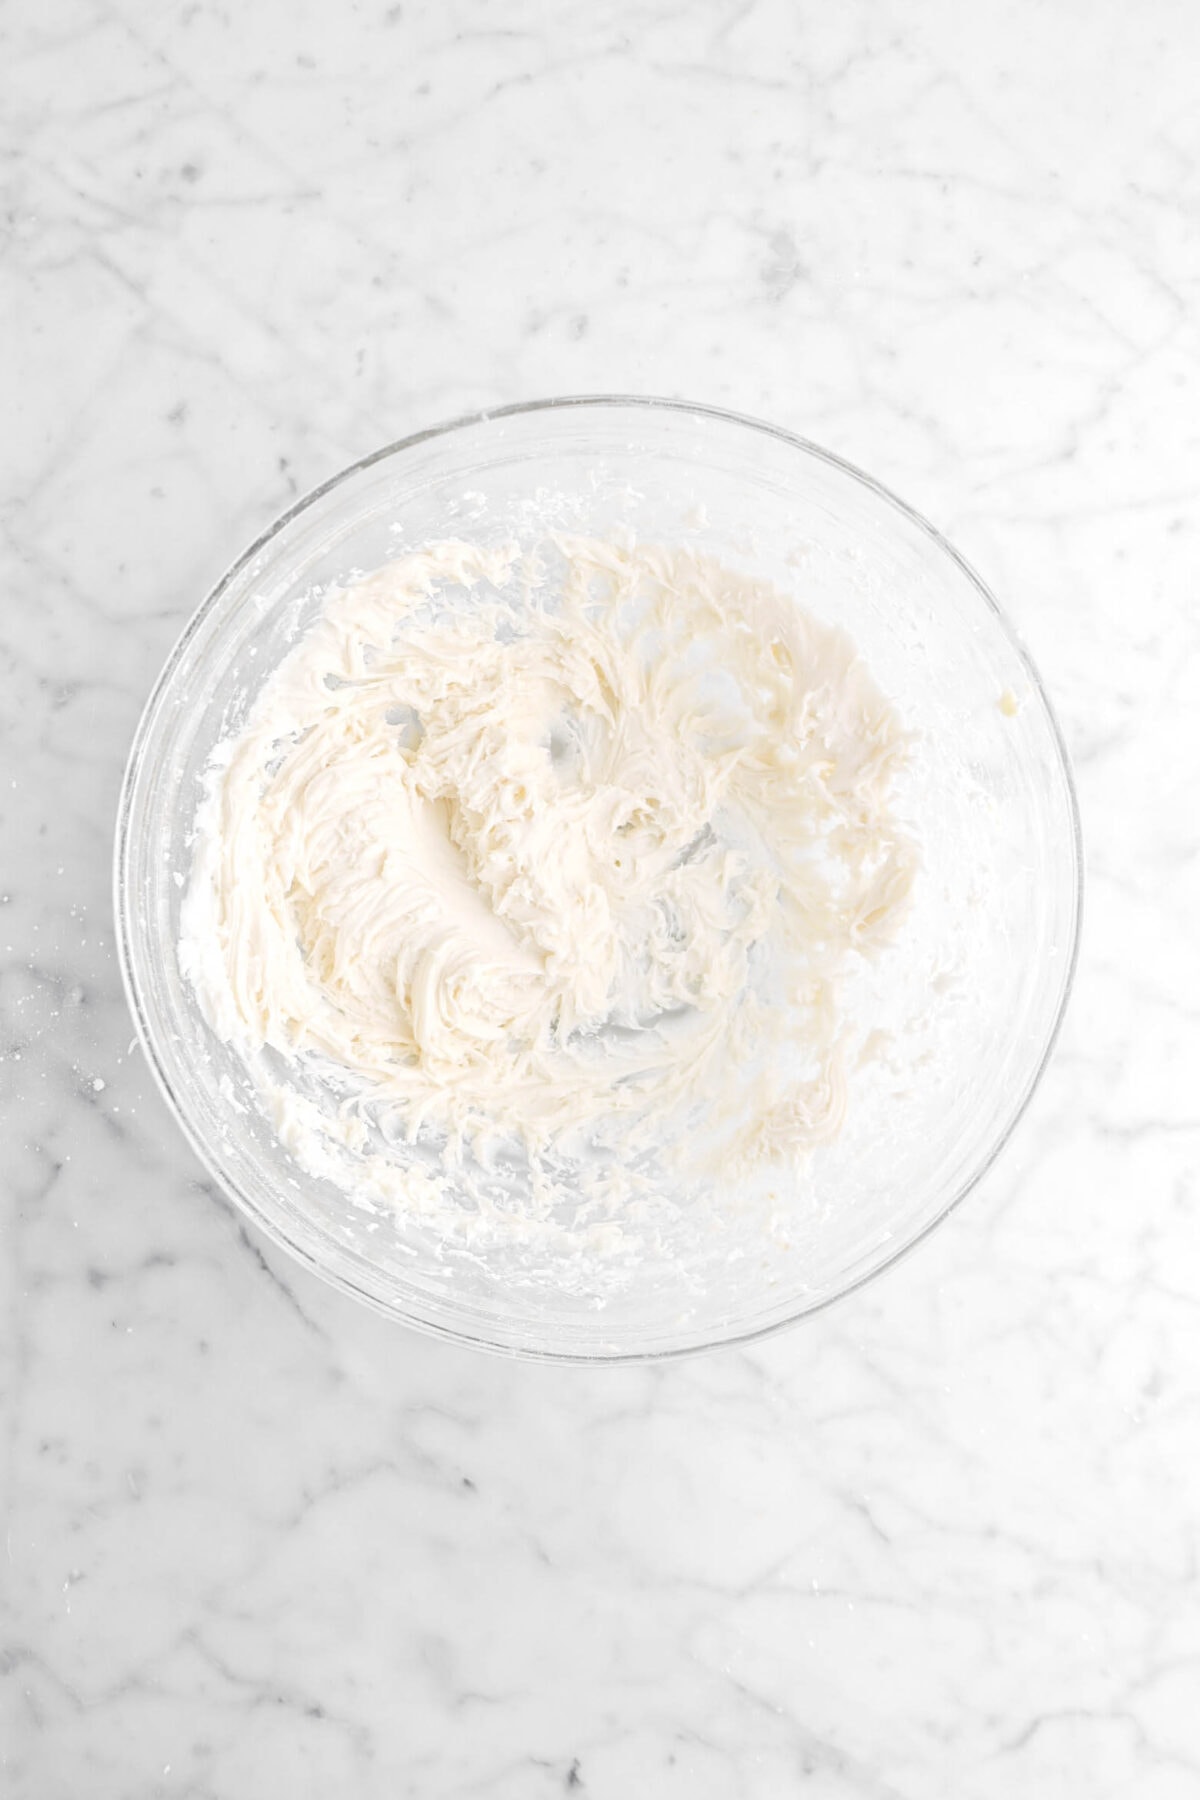 vanilla stirred into fondant mixture